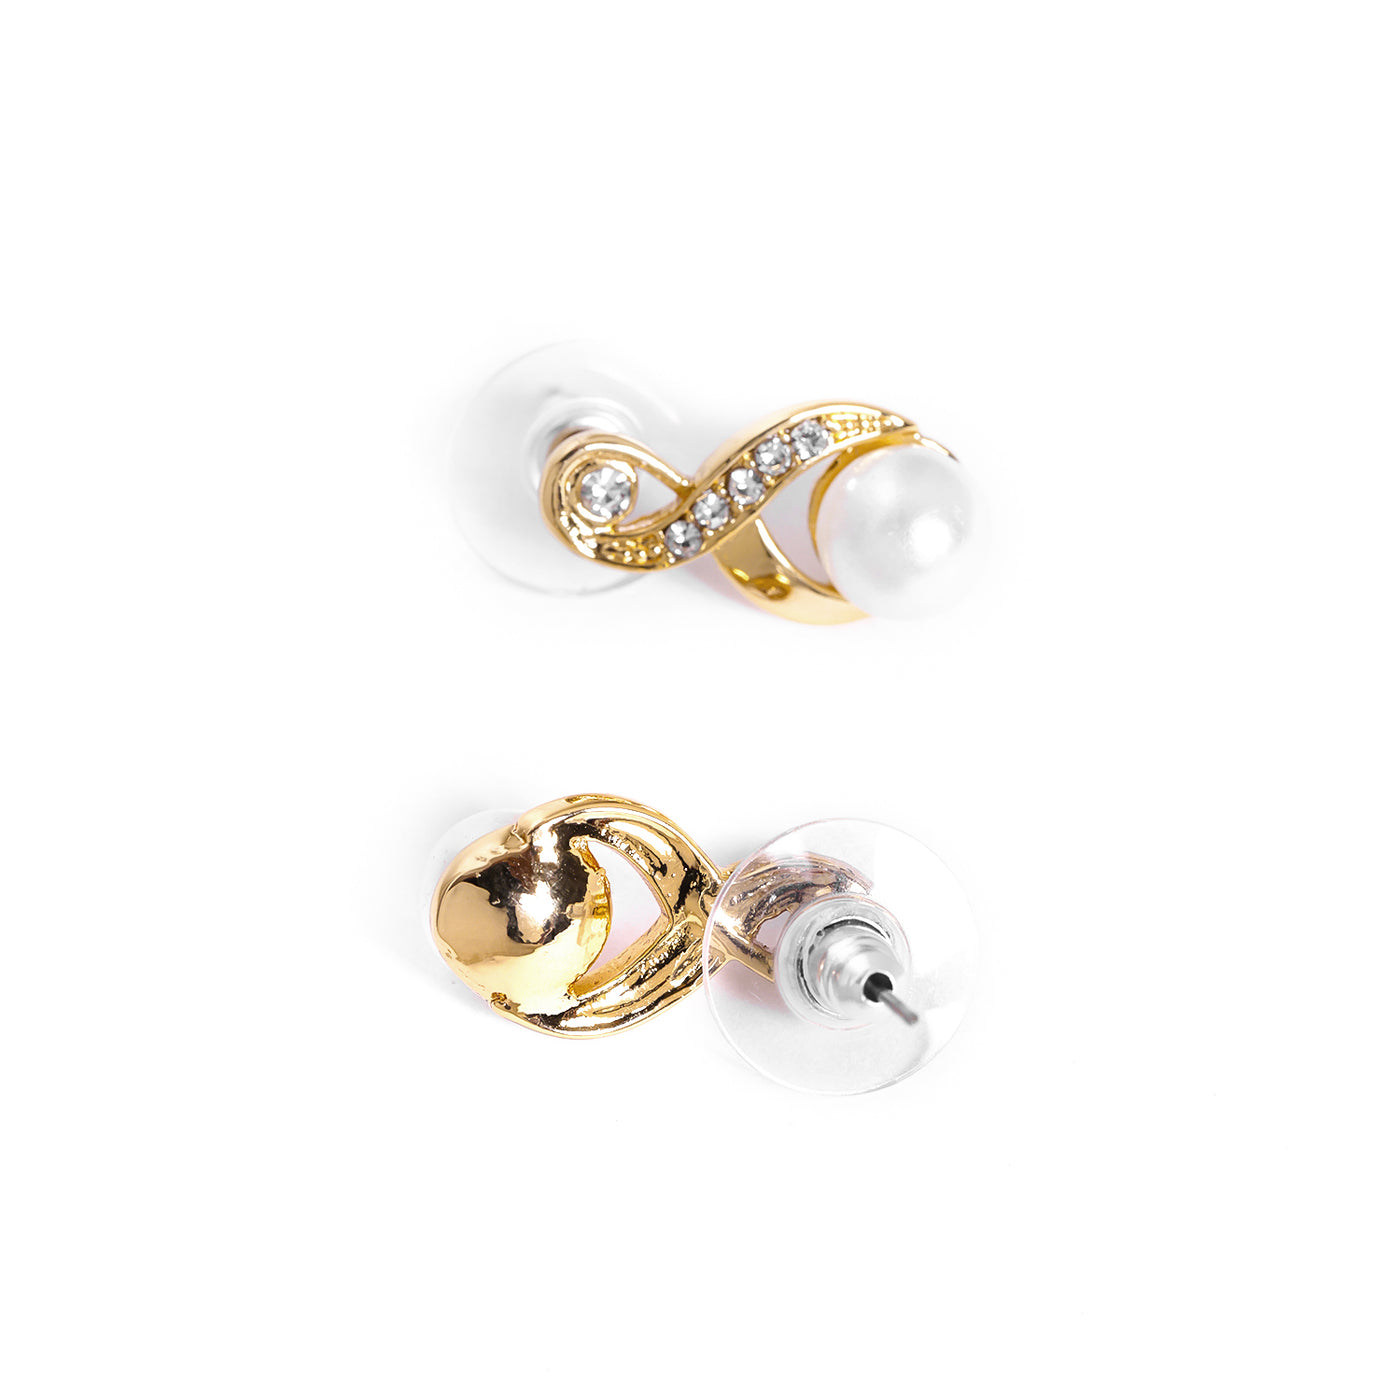 Estele Gold Plated Pearl Drop Necklace Set